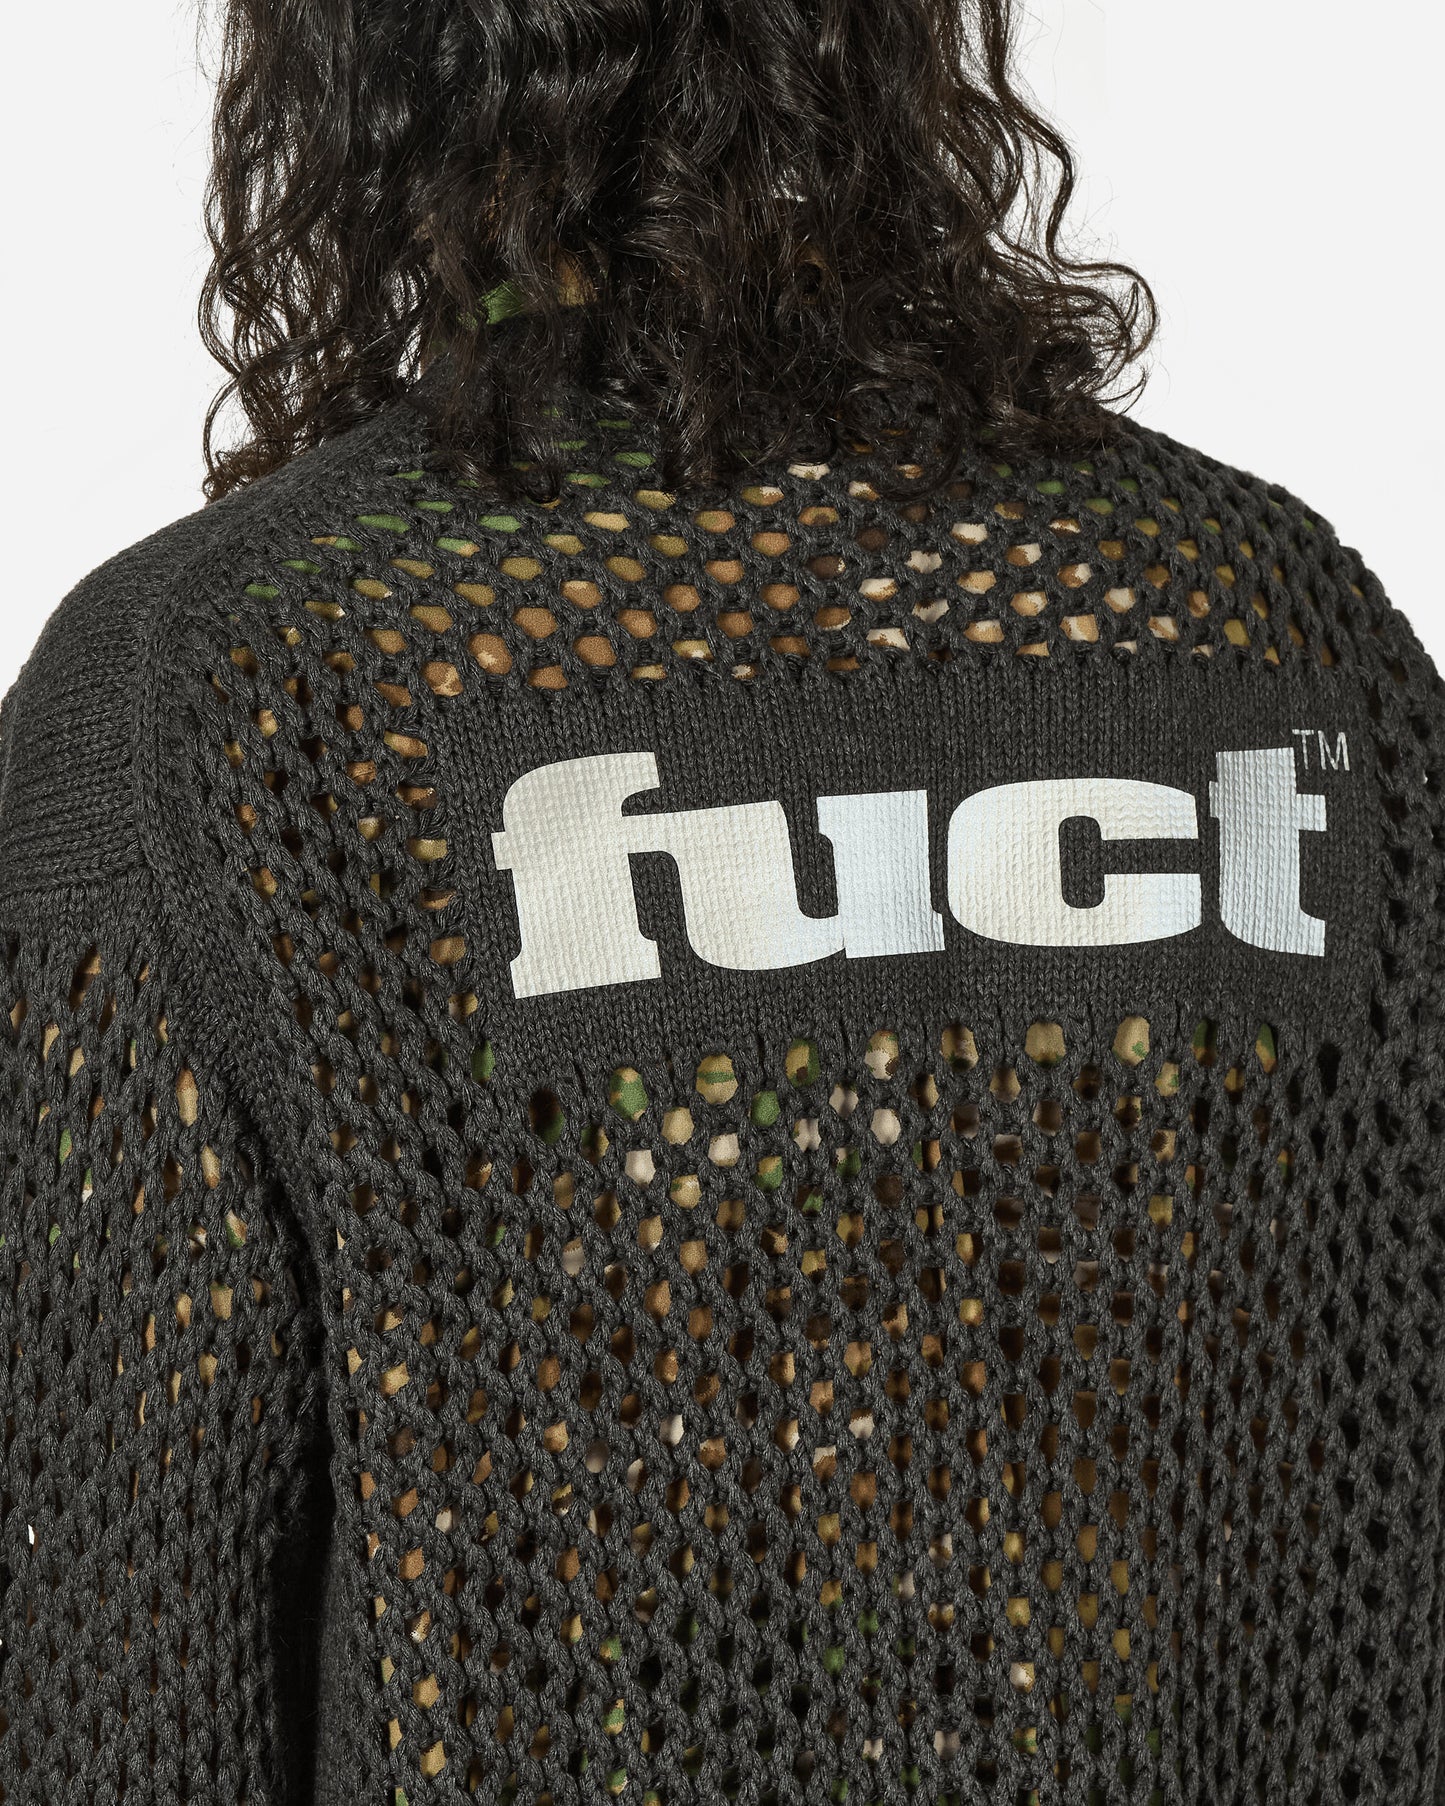 FUCT Drop Stitch Cardigan + Screen Print Dark Grey Knitwears Cardigans TBMW015YA03 GRY0003